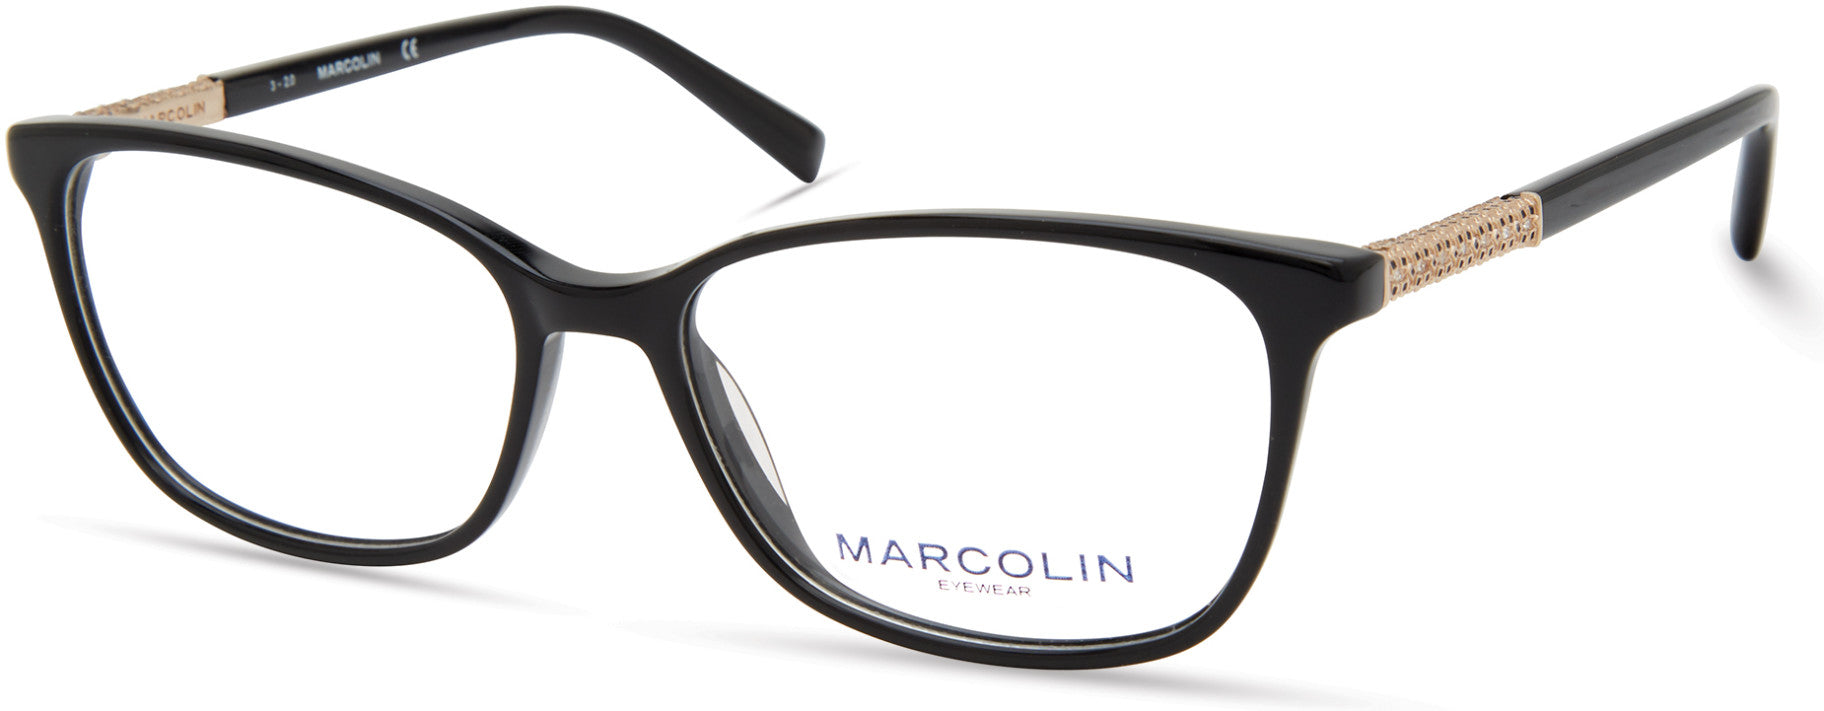 Marcolin MA5025 Square Eyeglasses 001-001 - Shiny Black